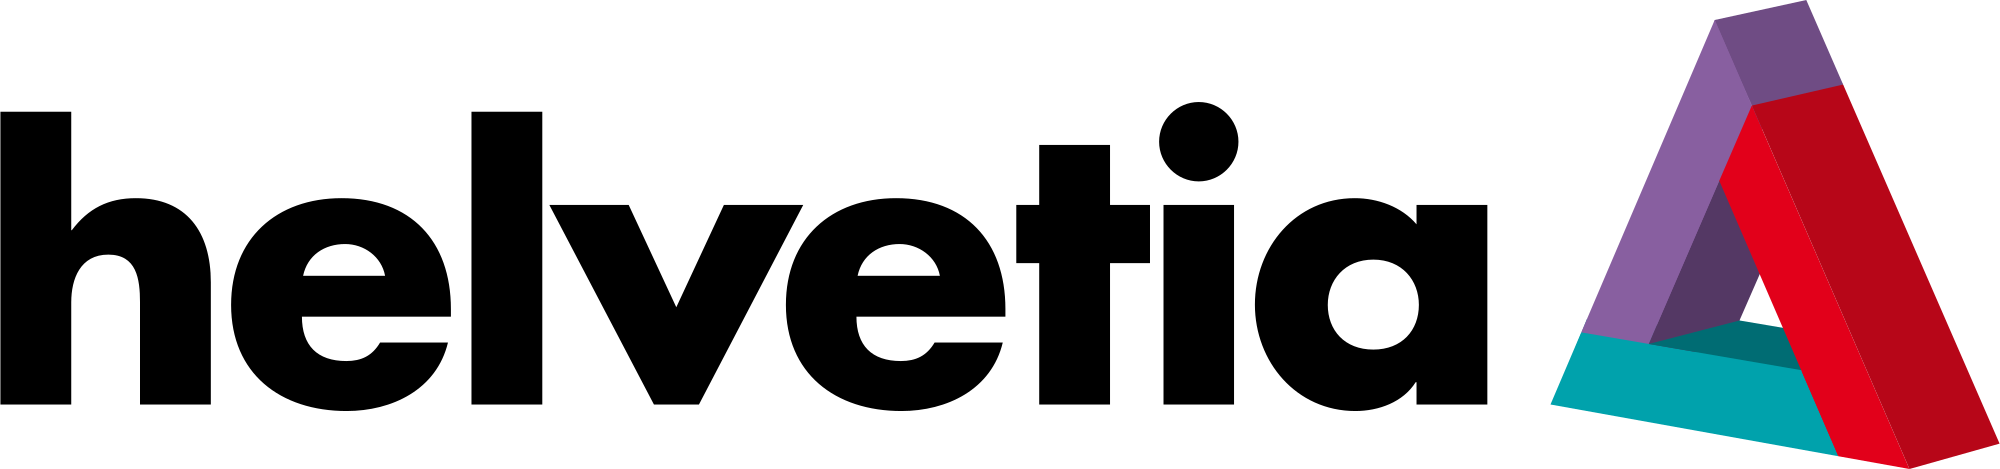 Helvetia-Versicherung-Logo